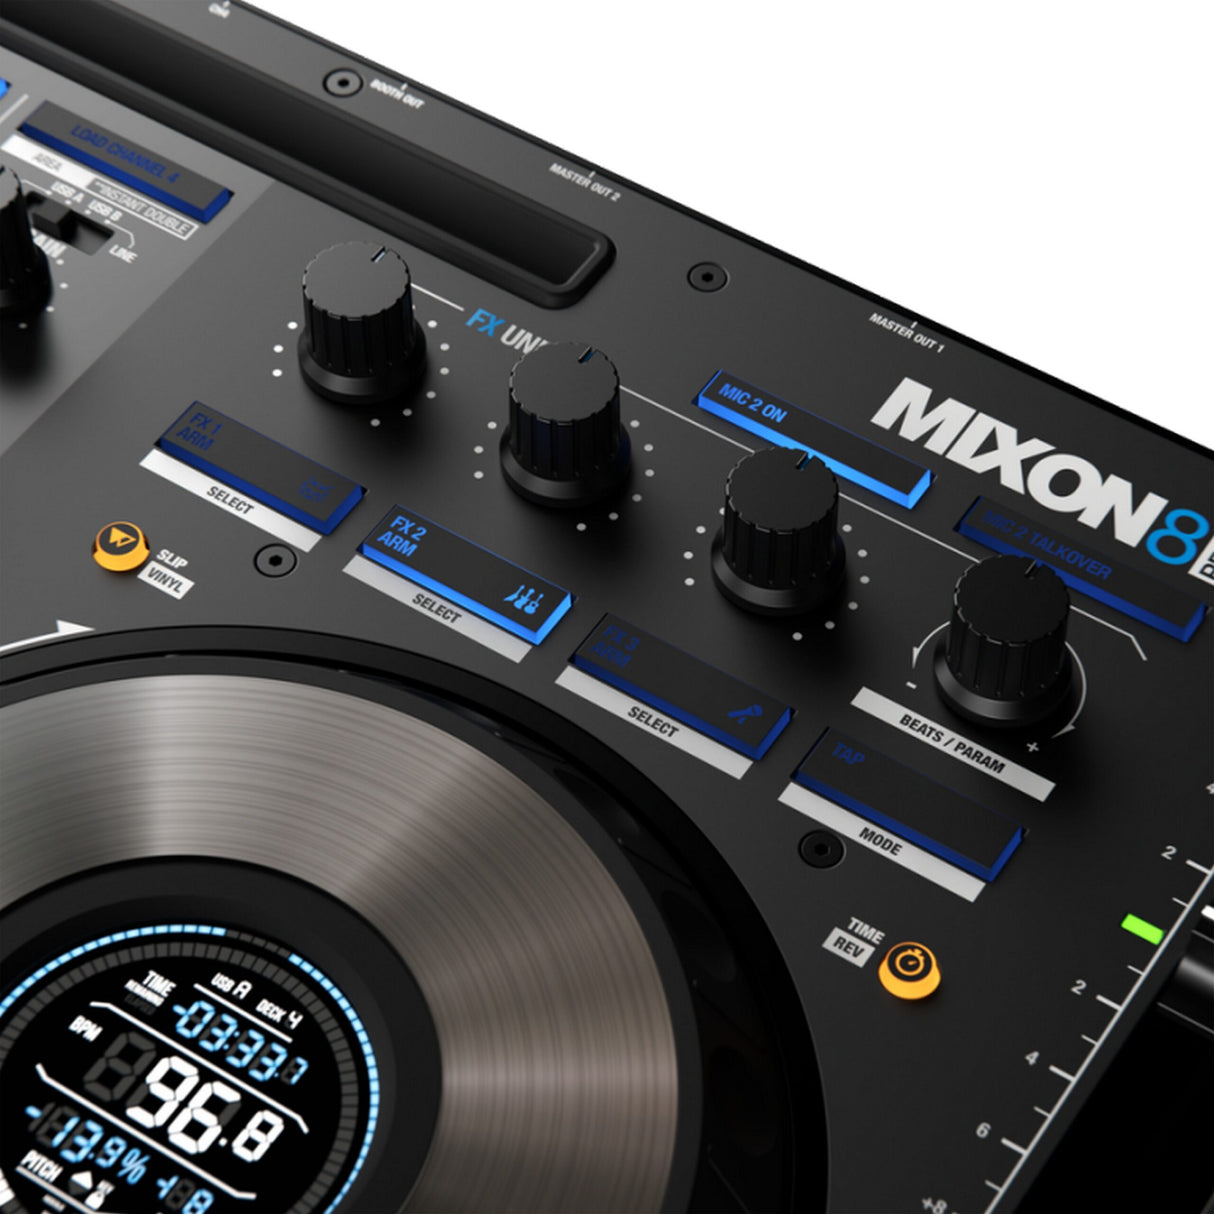 Reloop Mixon 8 Pro 4-Channel Professional Hybrid DJ Controller for Serato DJ Pro (Used)